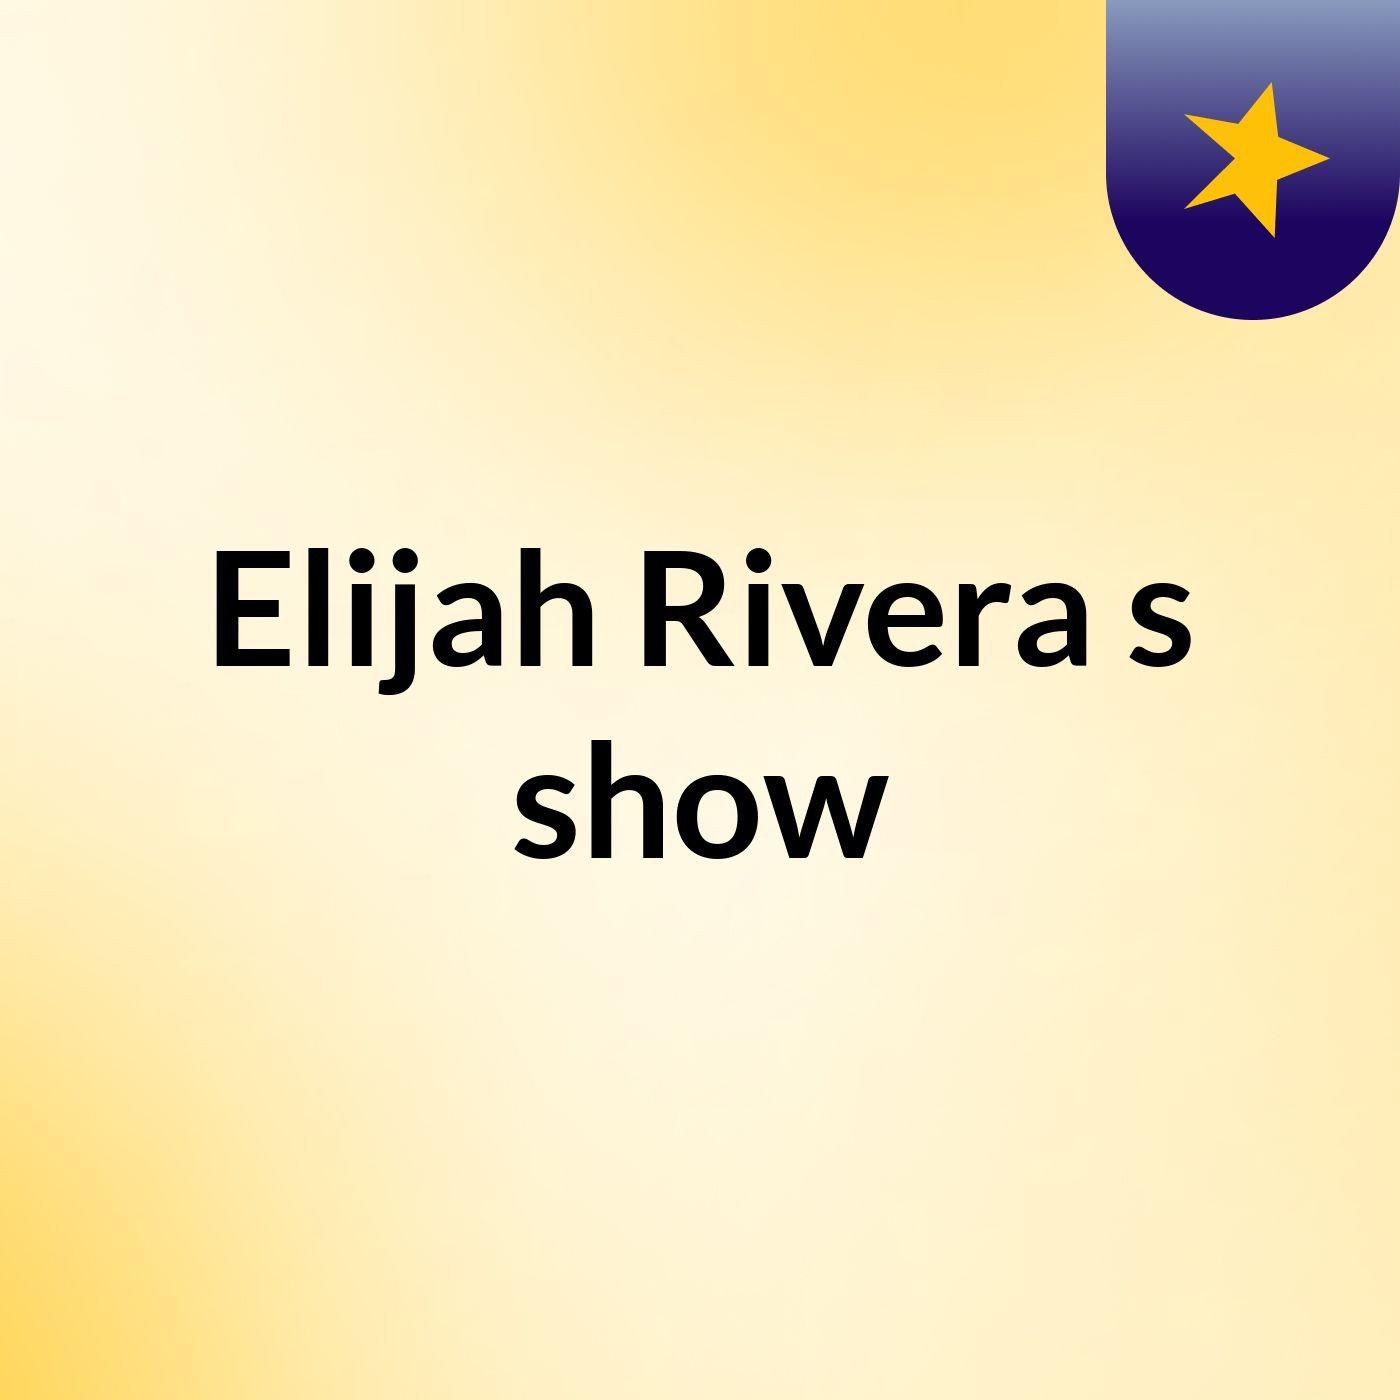 Elijah Rivera's show